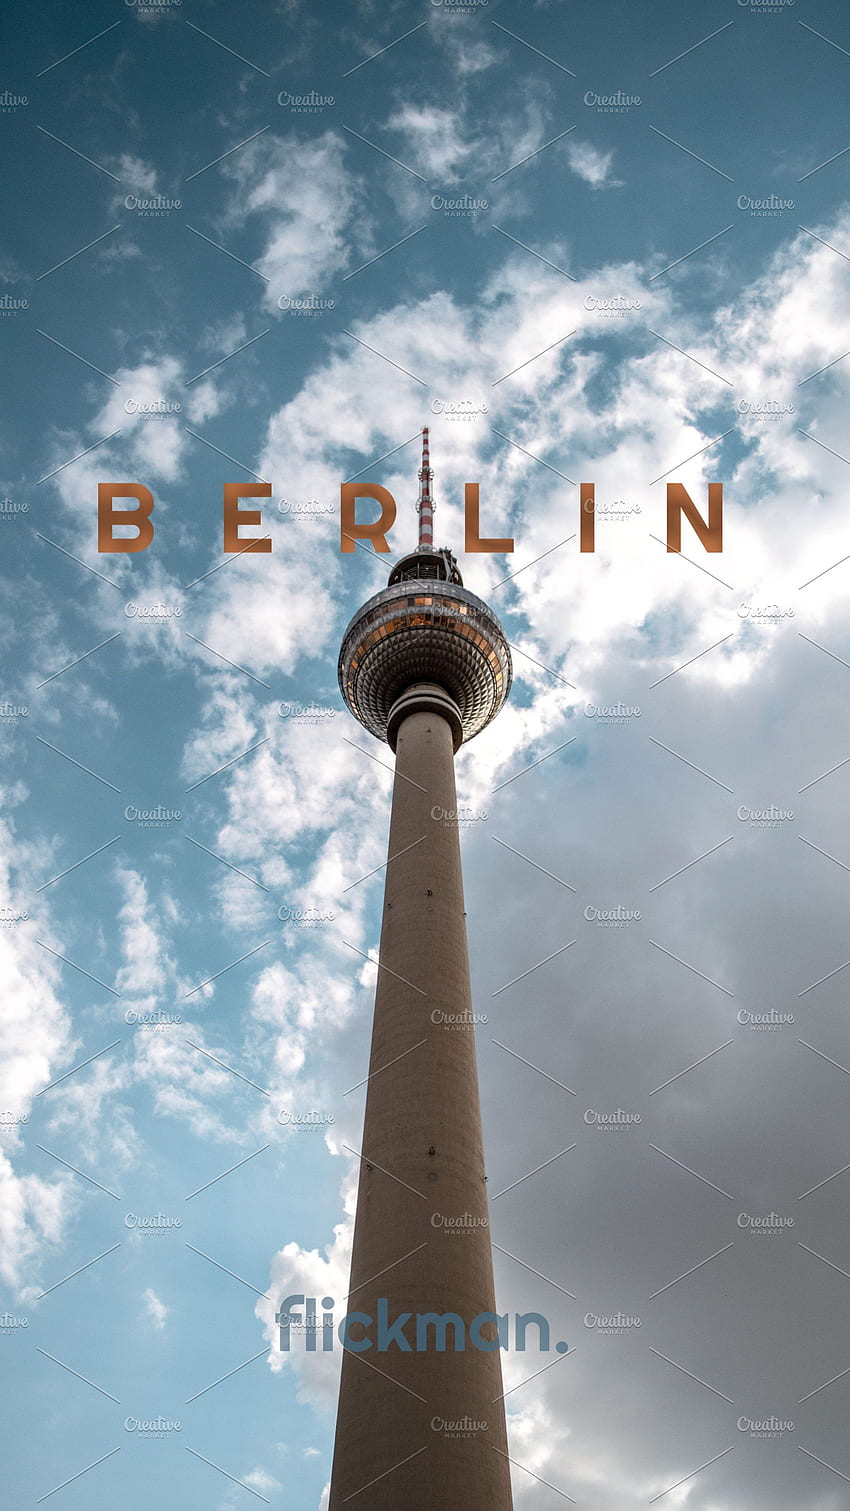 Berlin, Germany iPhone HD phone wallpaper